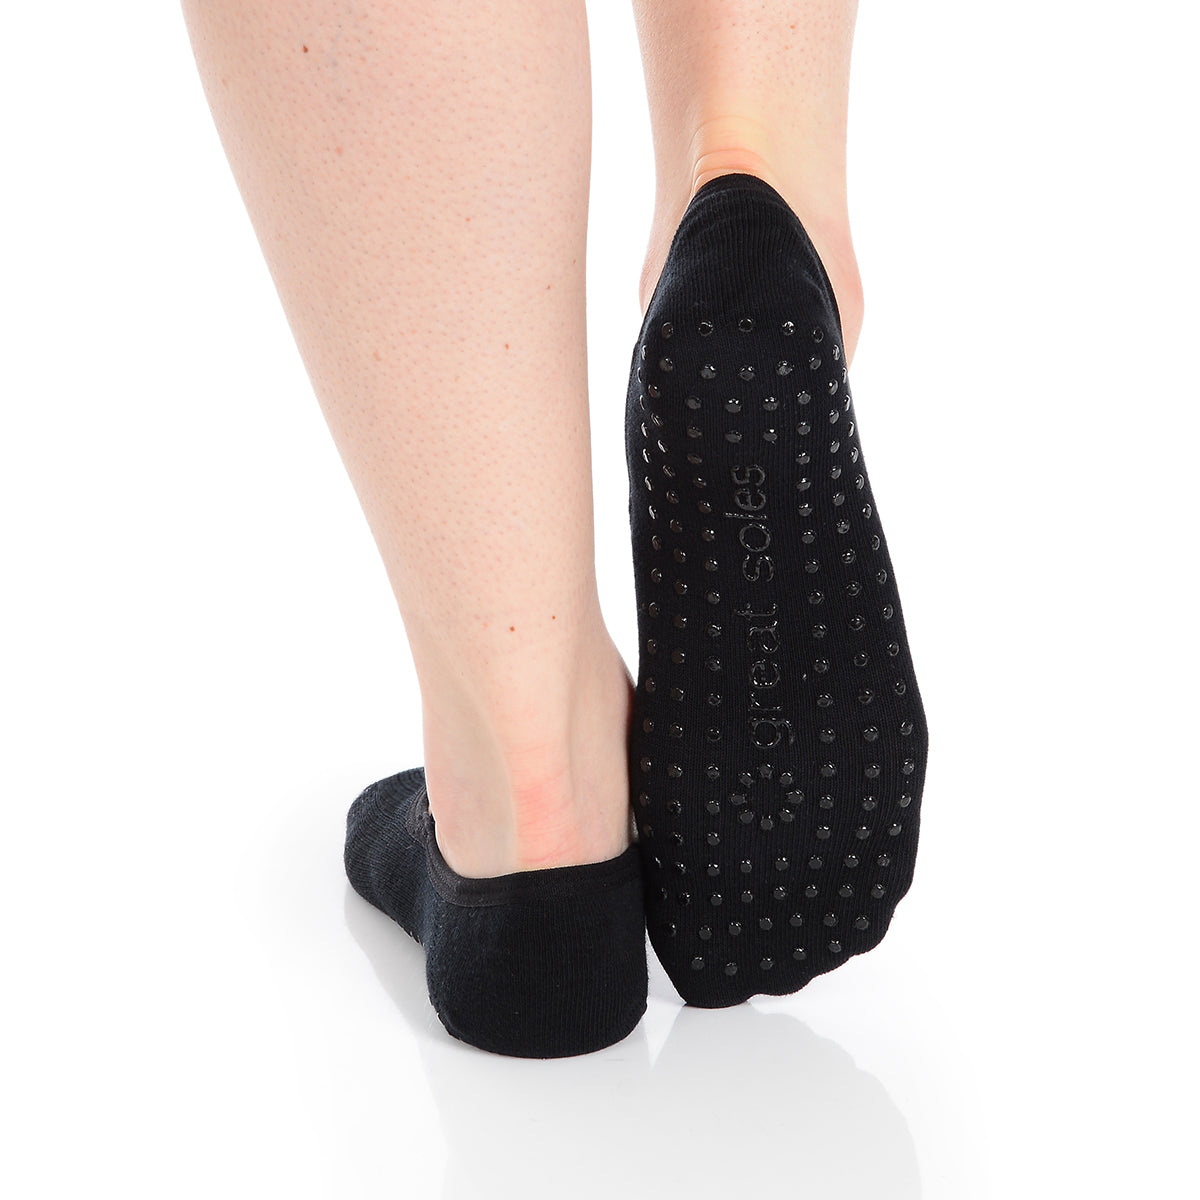 Breathable Black Mesh Grip Sock for Pilates Barre Yoga Dance